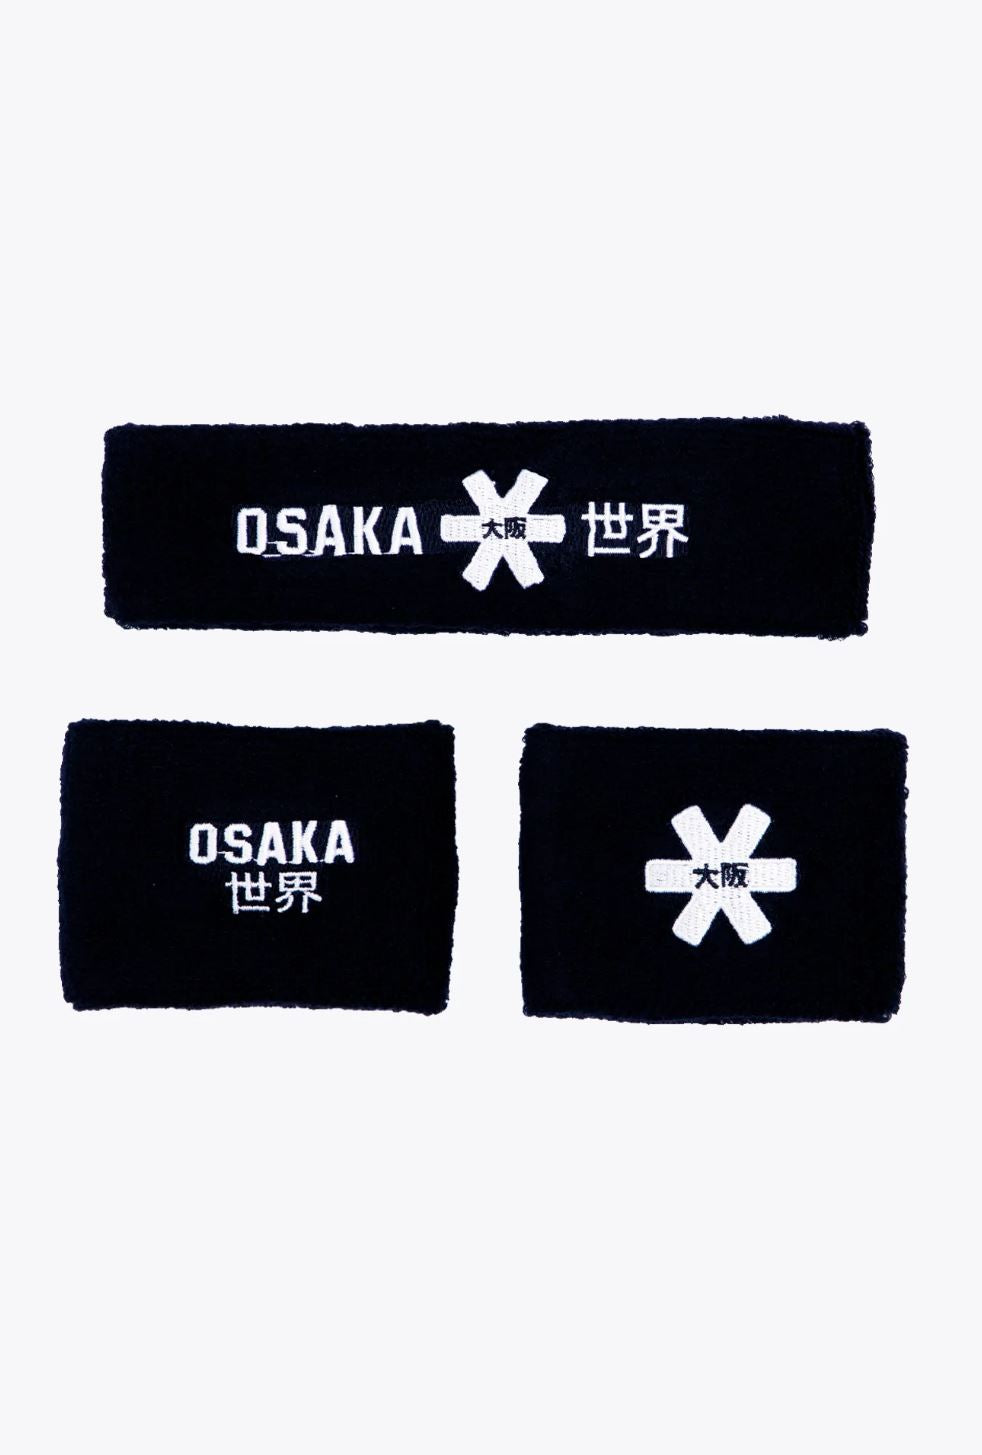 Osaka Zweetband Set (French Navy)